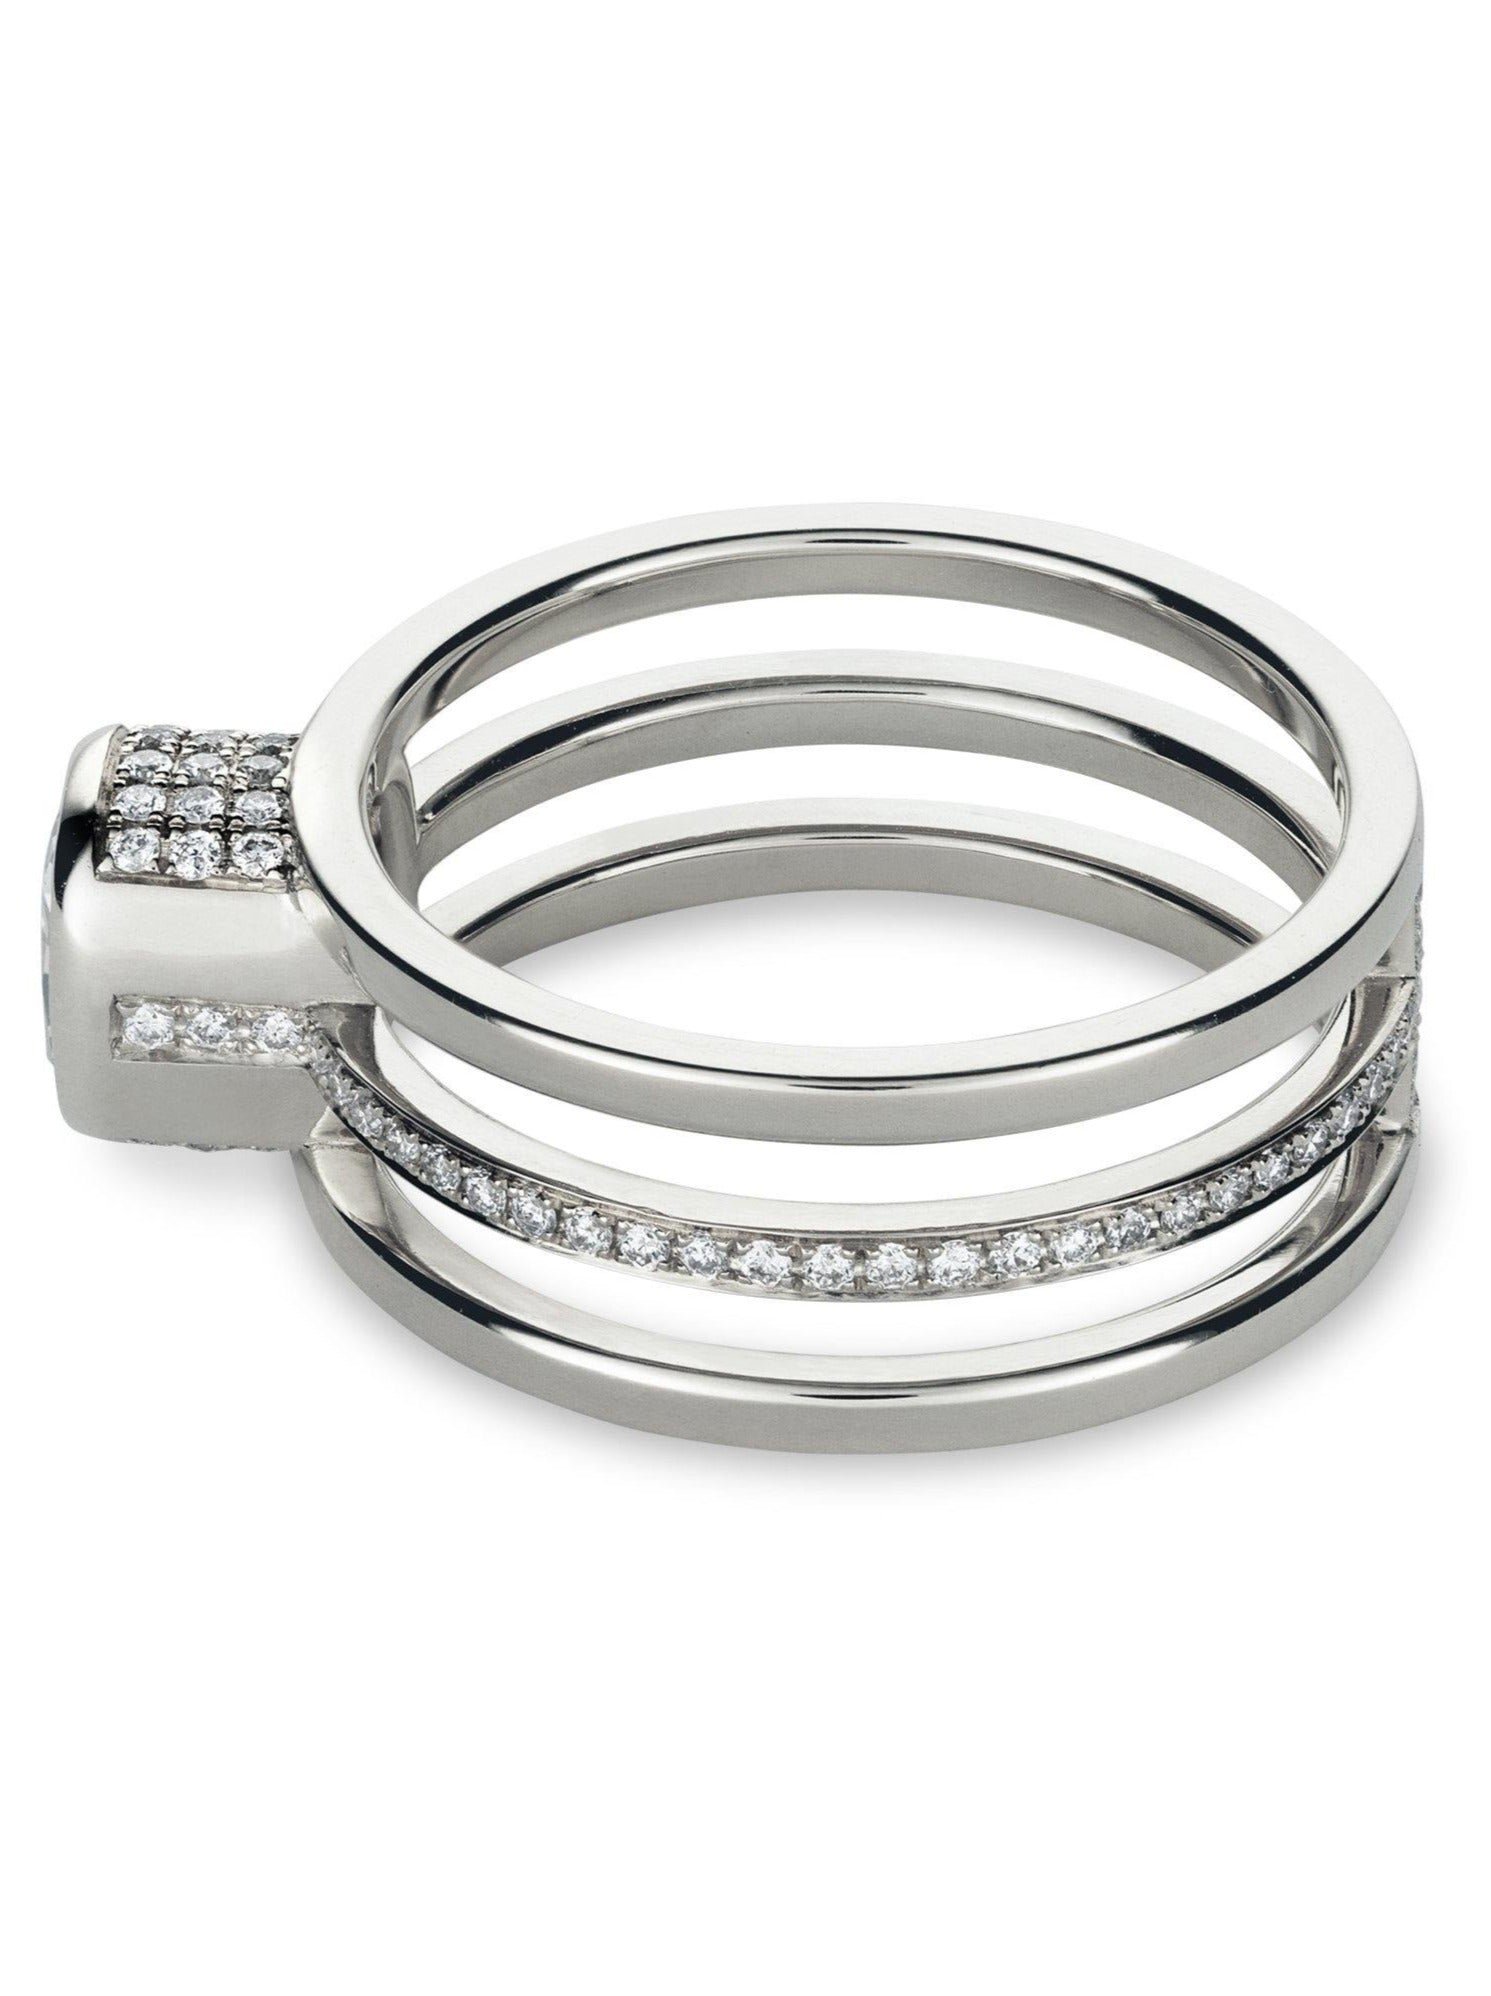 Sparkling - Ring with 1.41 carat sparkling diamonds